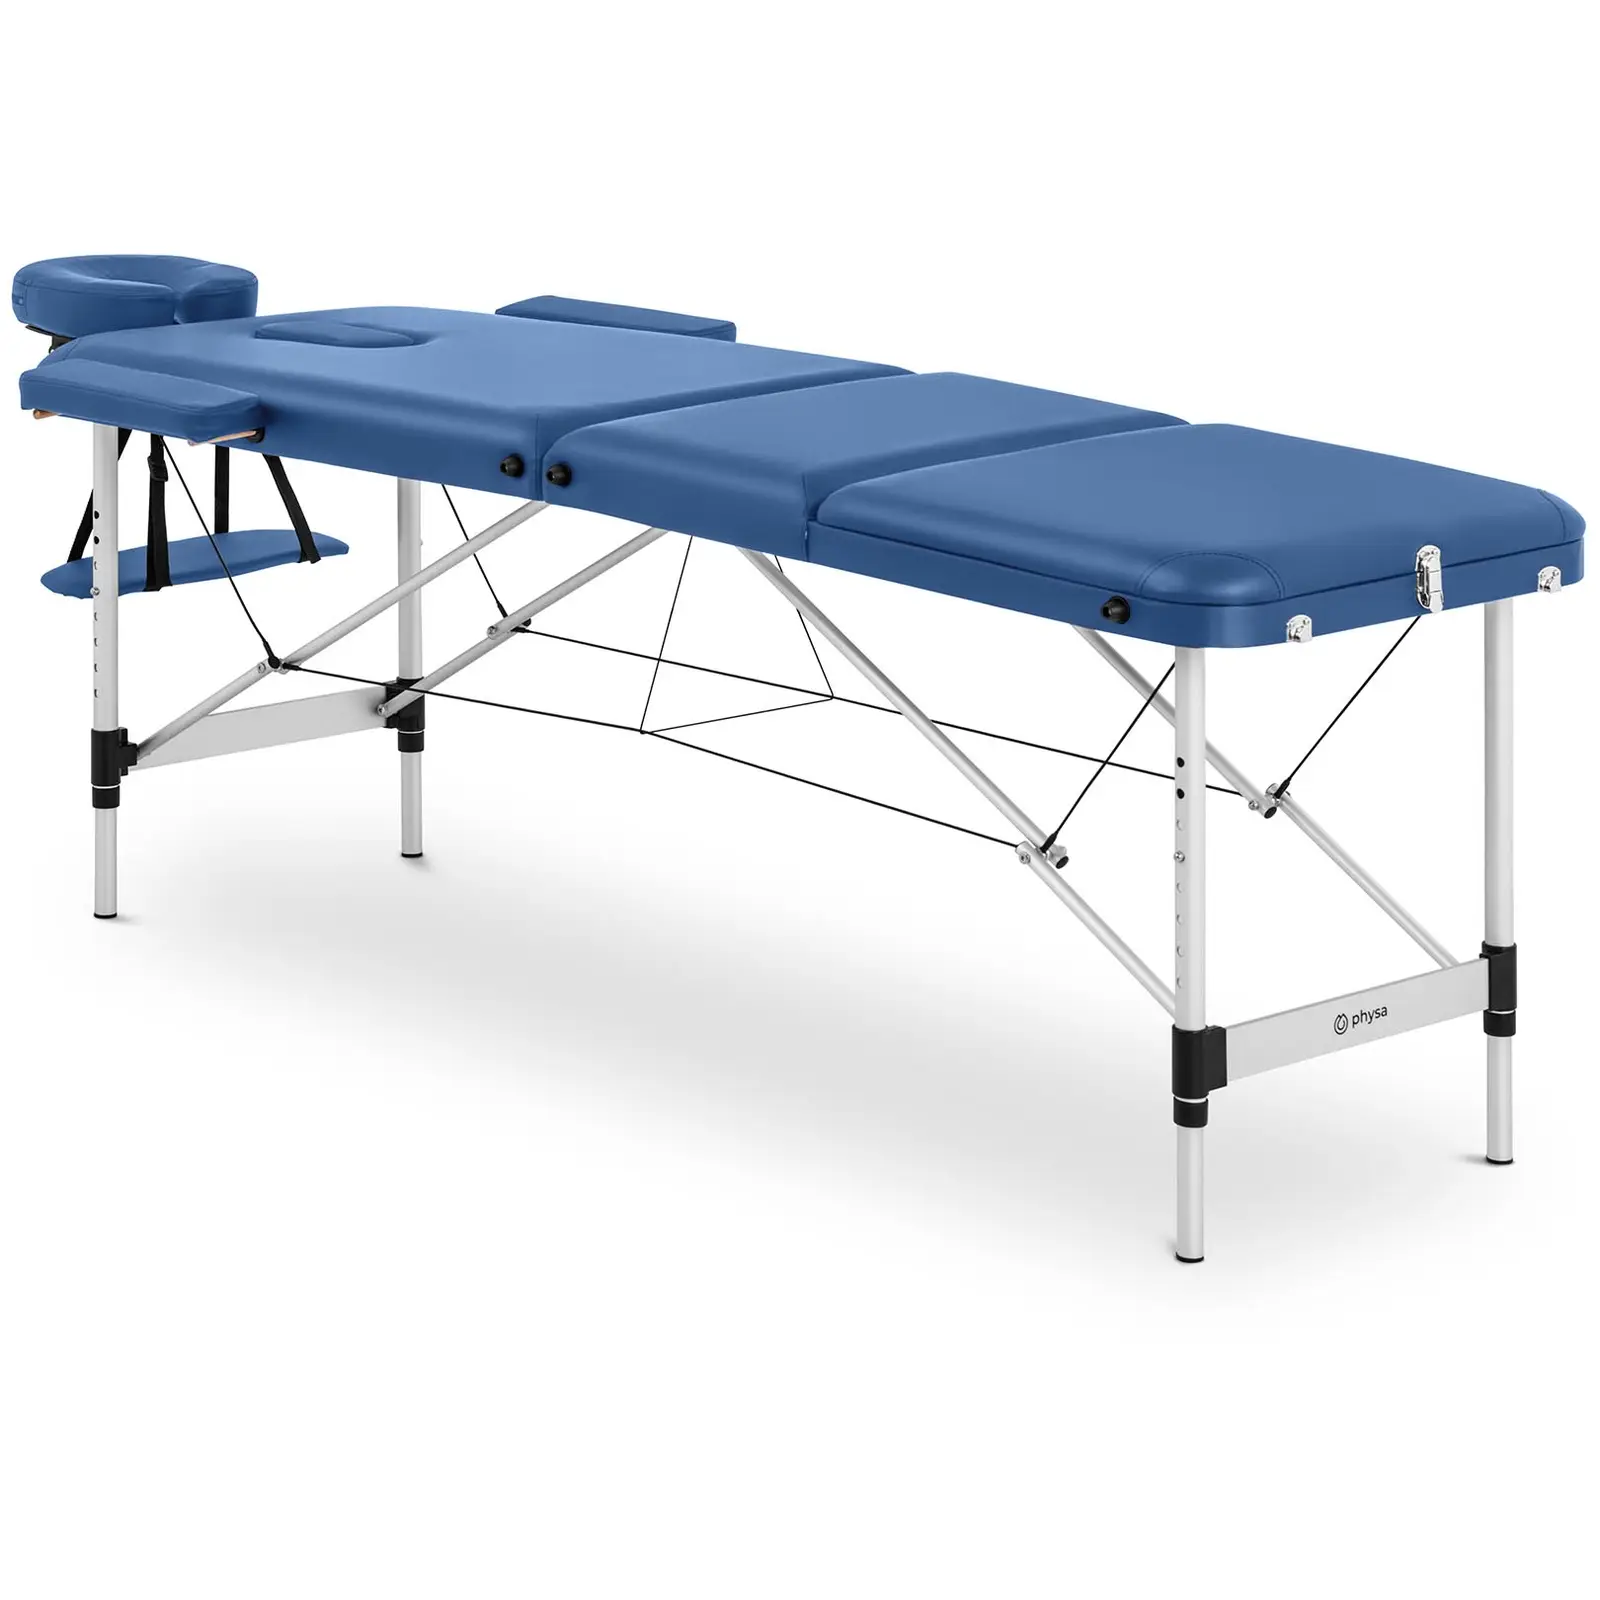 Massagebriks sammenklappelig - 185 x 60 x 60 - 81 cm - 180 kg - blå